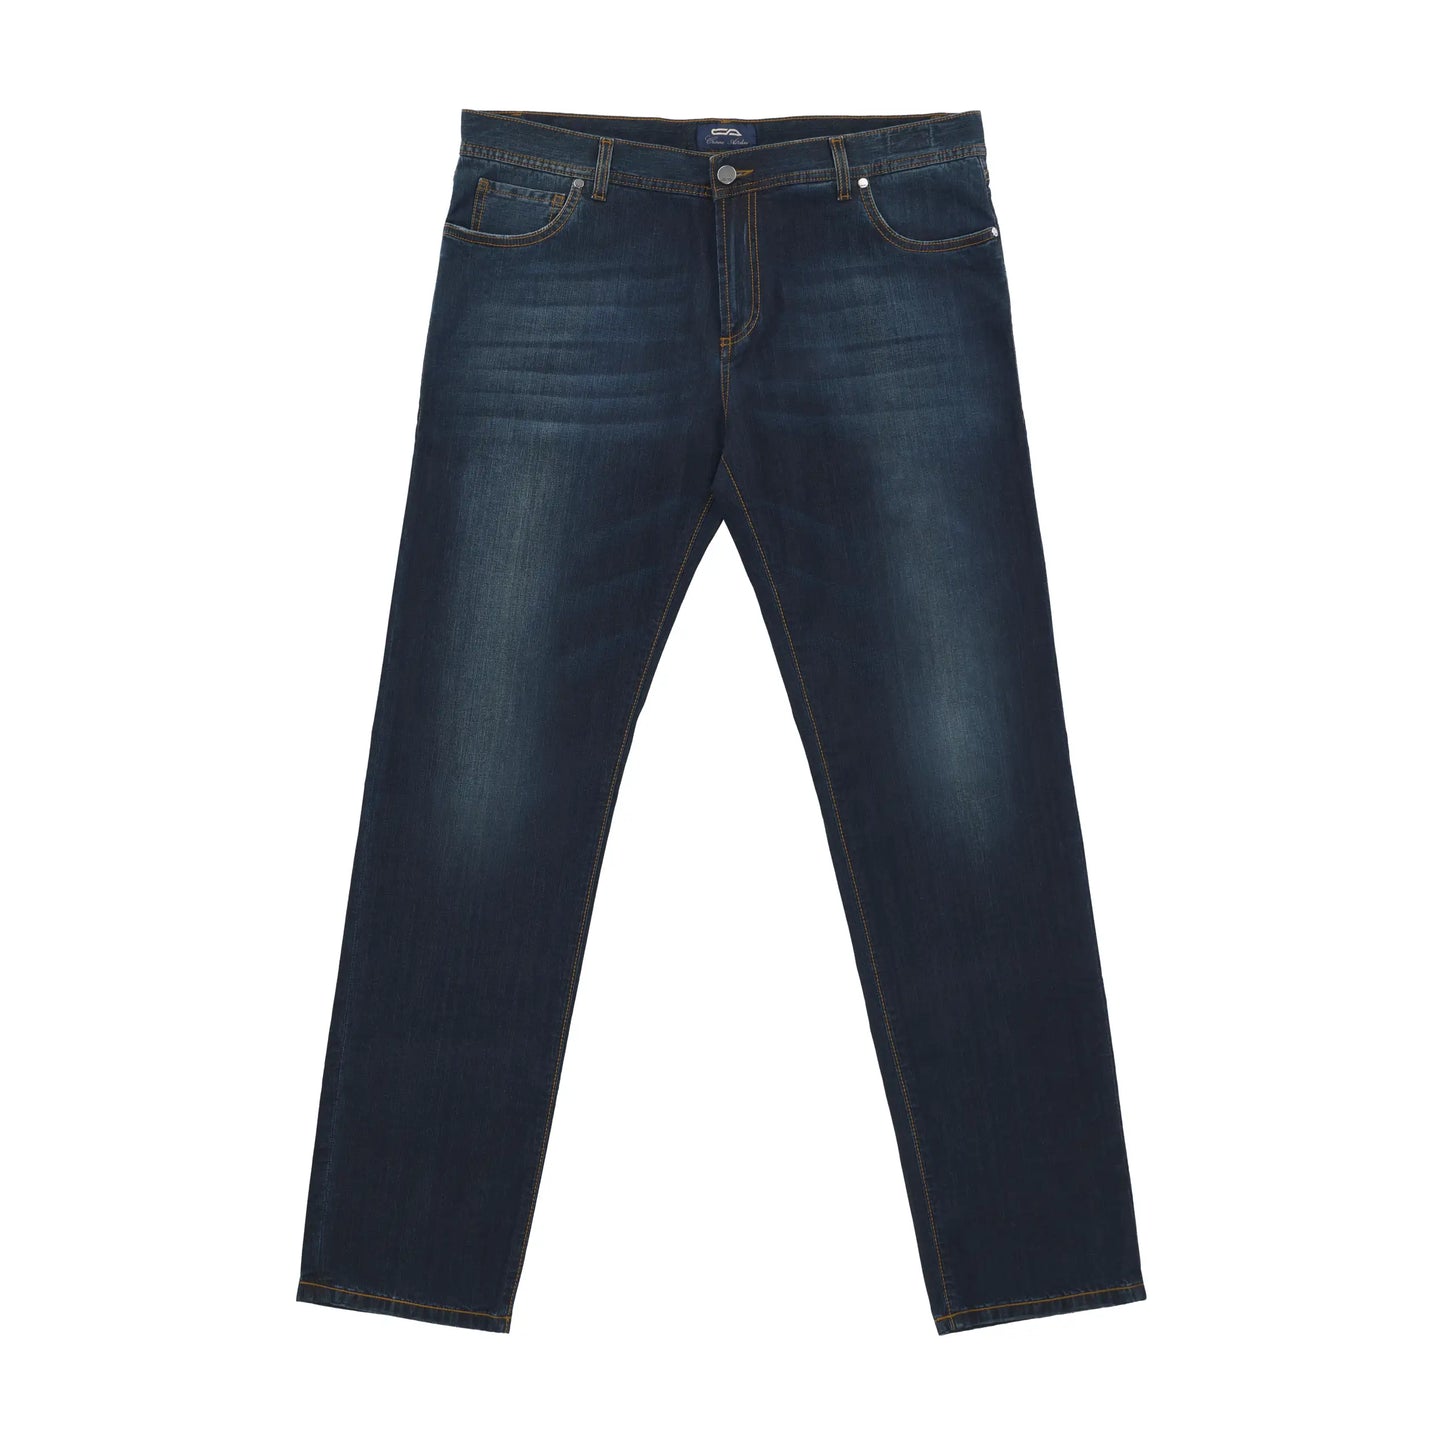 Regular-Fit Cotton Jeans in Denim Blue